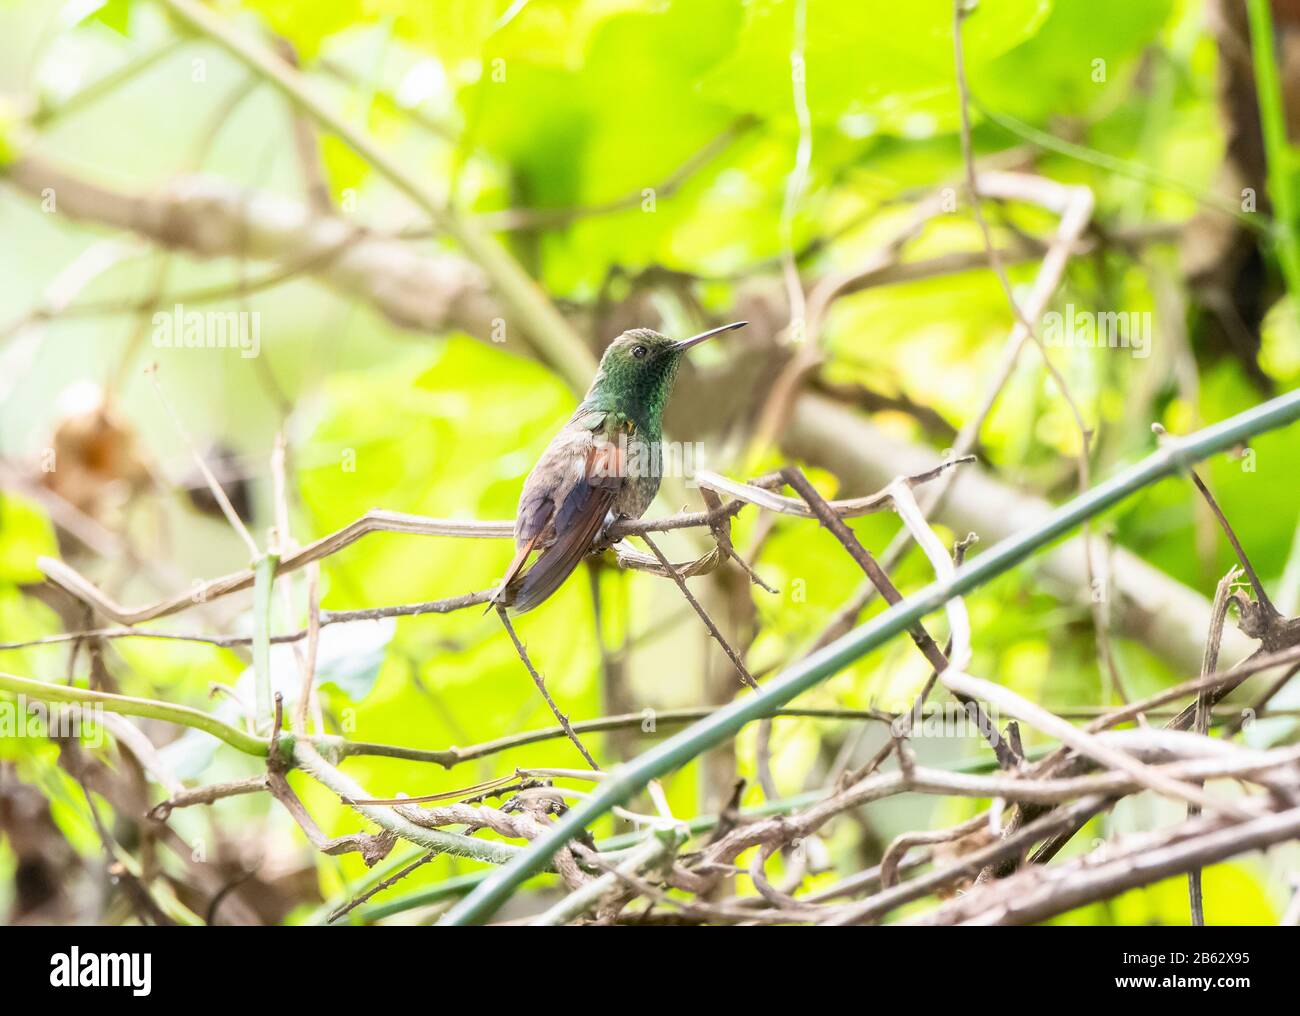 Berylline Hummingbird (Amazilia beryllina) Perched on Branches with a Leafy Dense Background Stock Photo